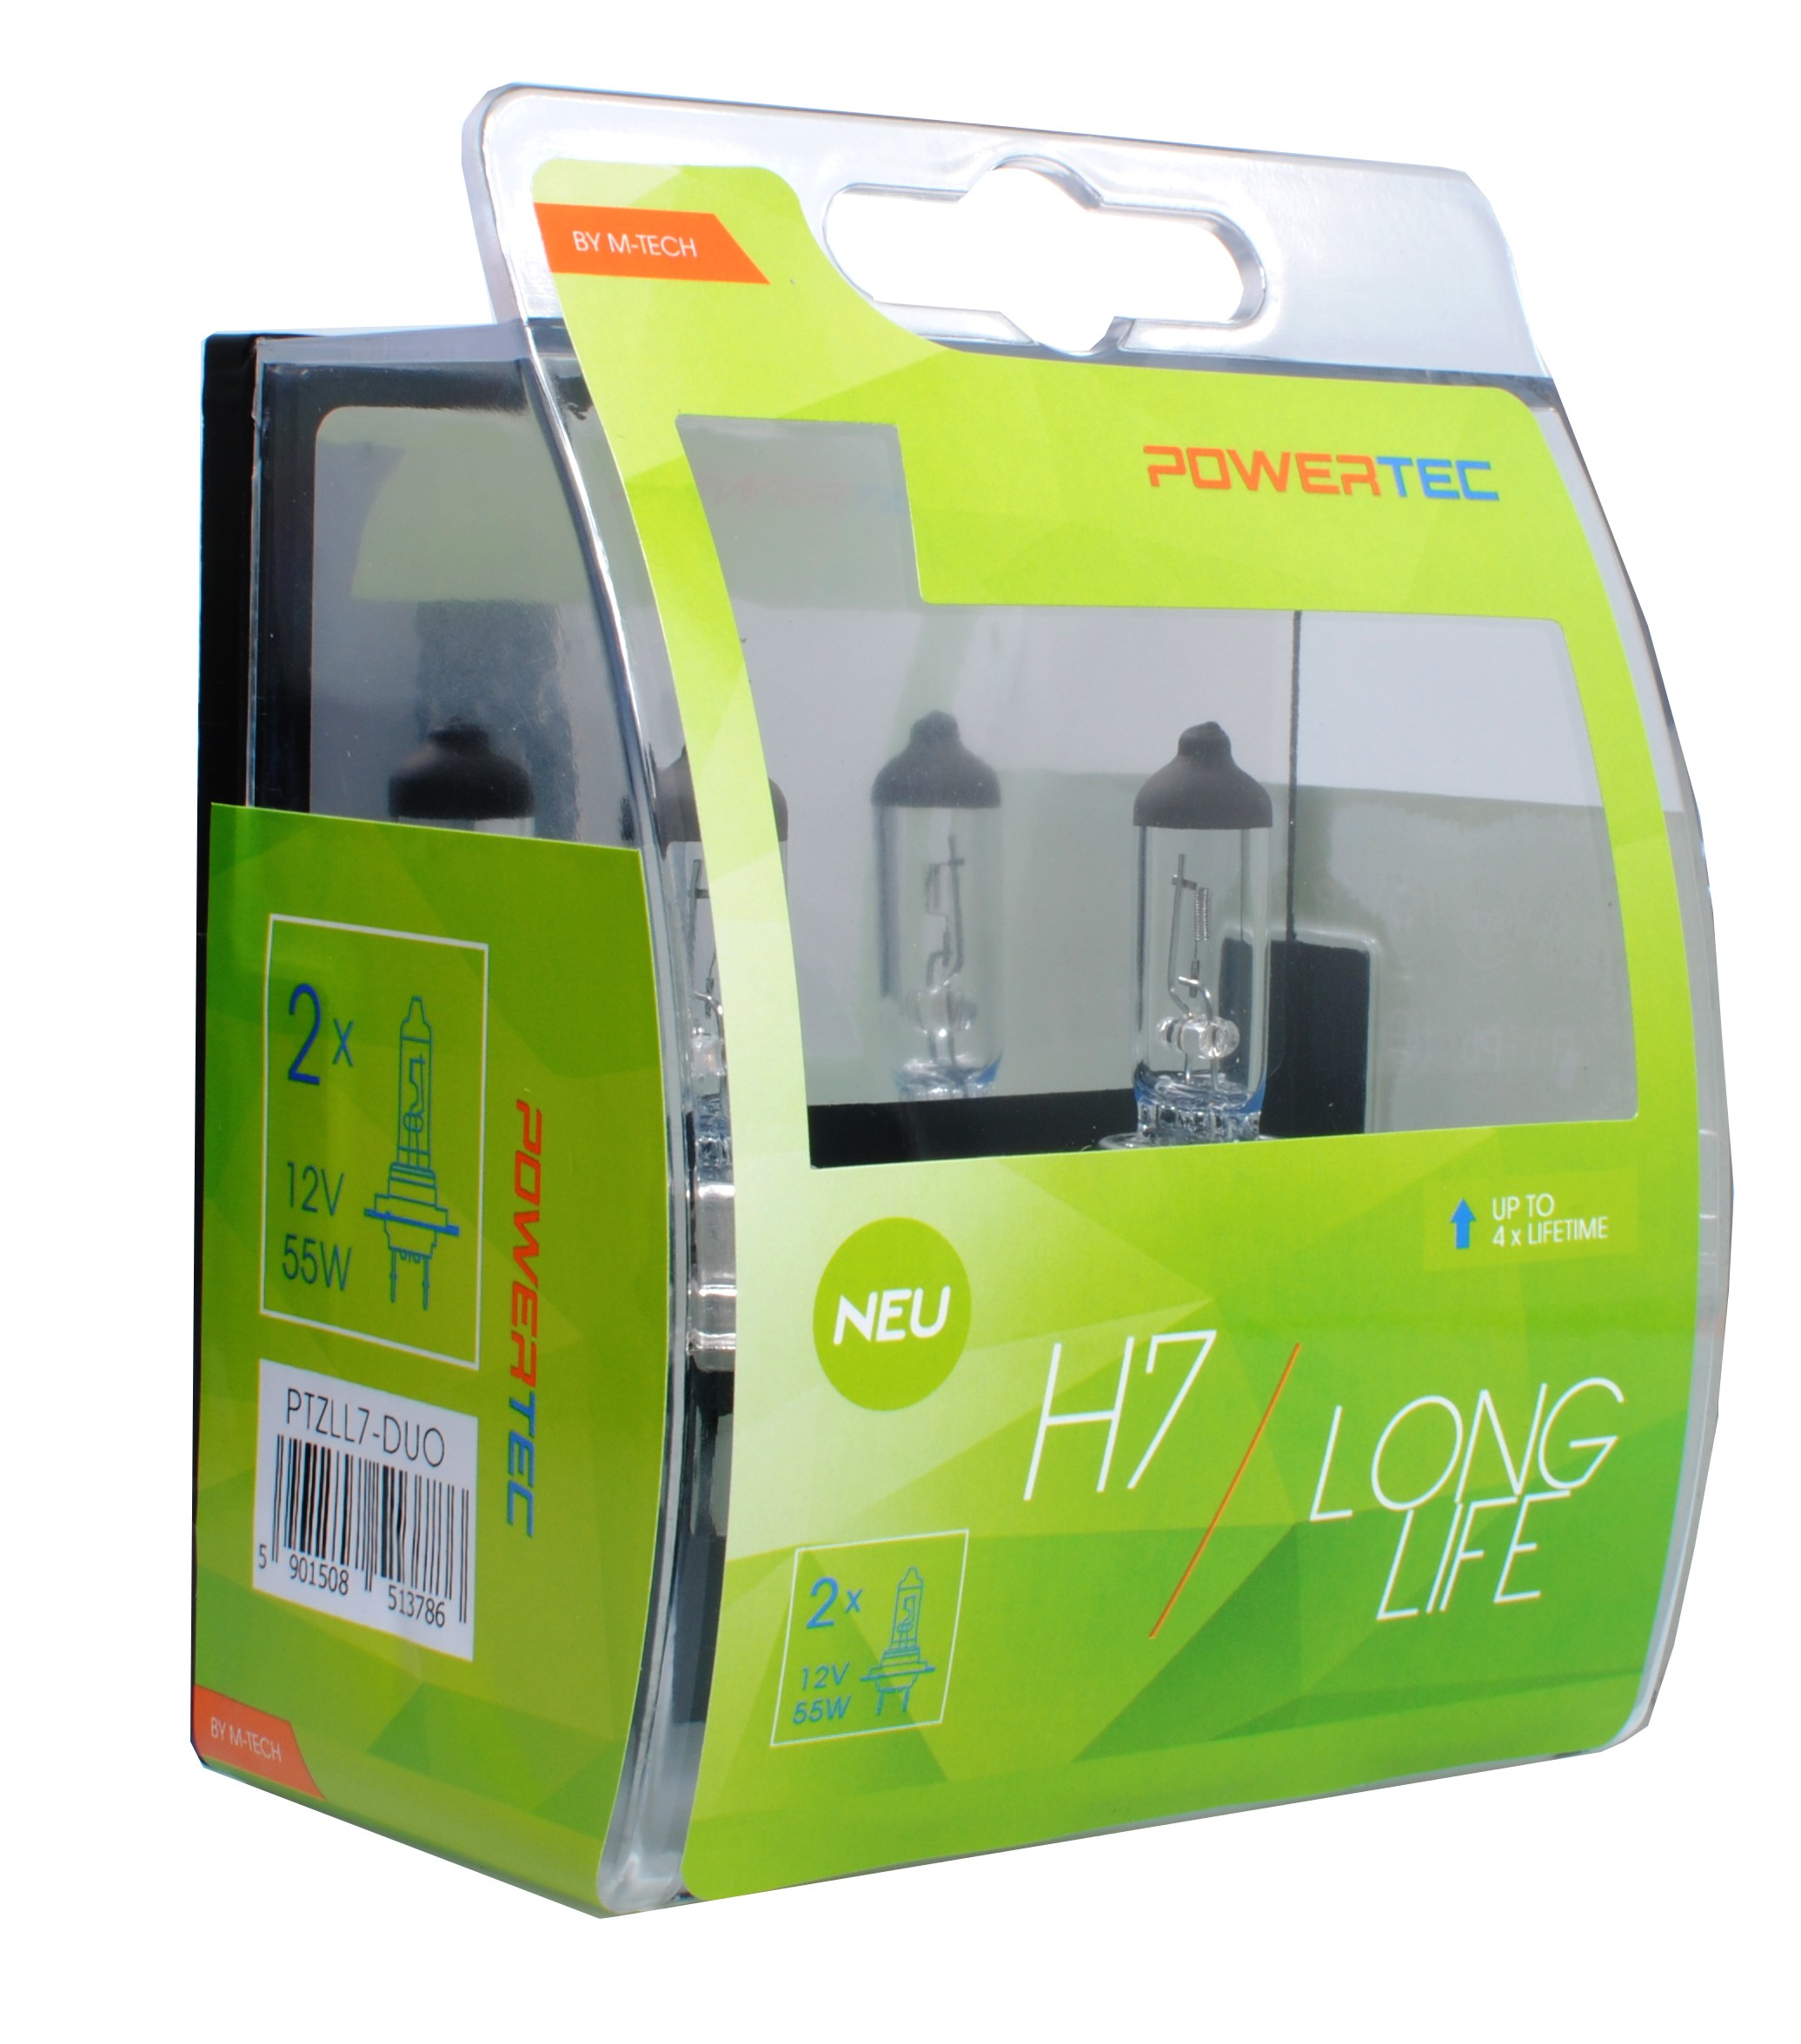 DUO COPPIA LAMPADINE POWERTEC LONG LIFE H7 12V 55W - PTZLL7/DUO -